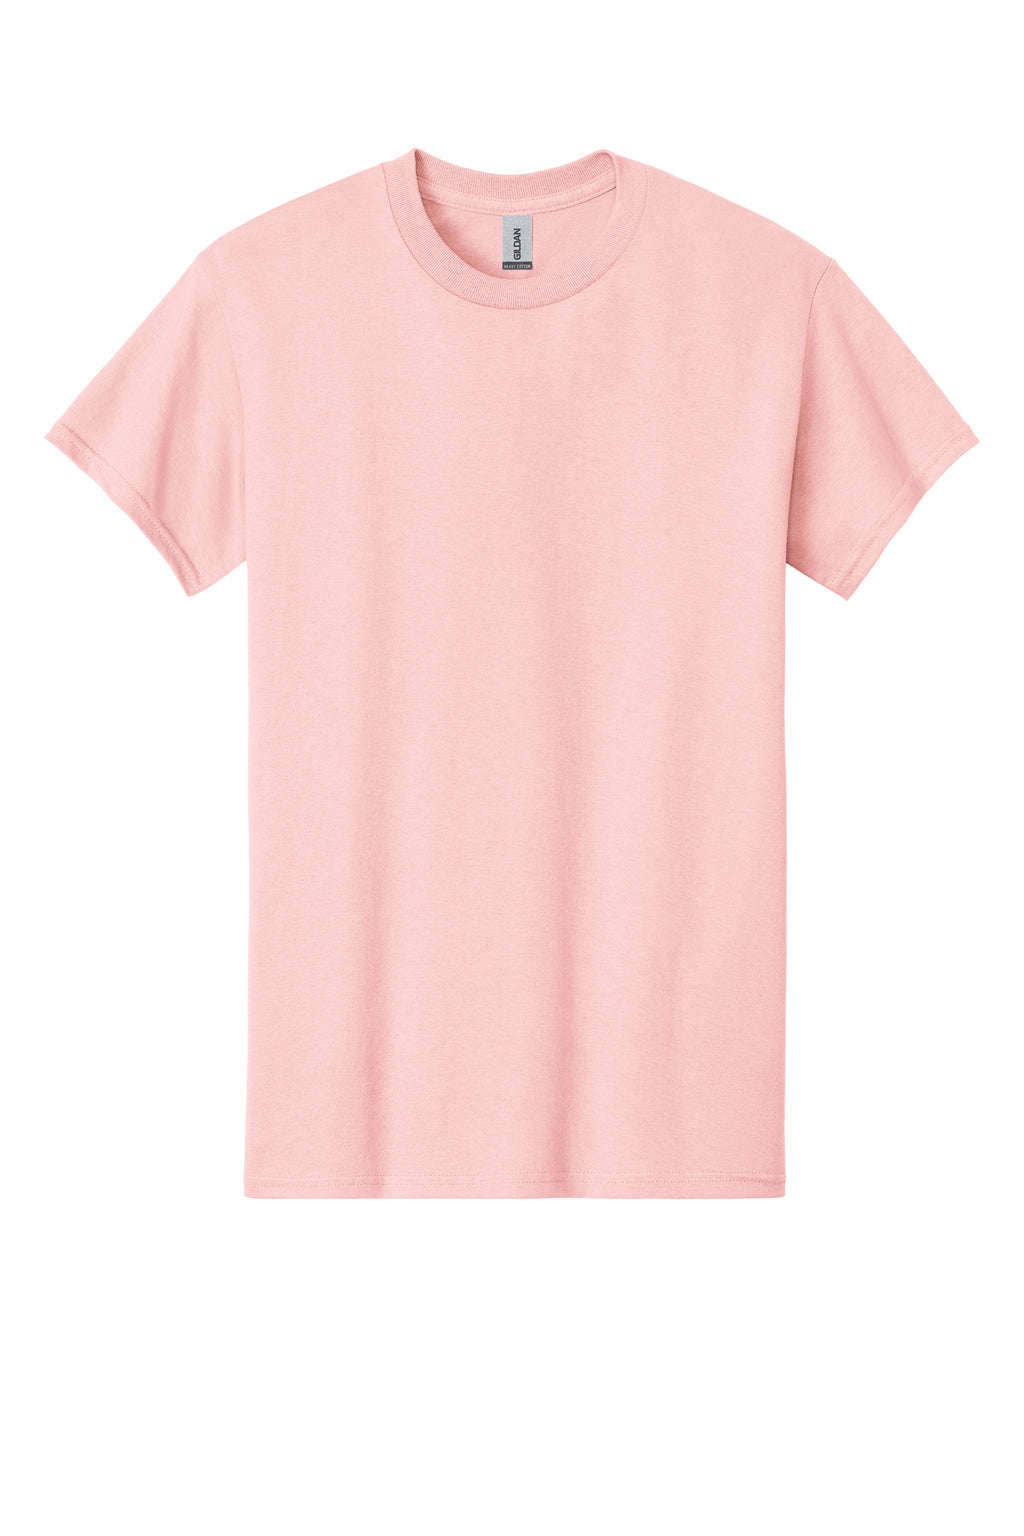 Gildan Mens/Unisex S/S Shirts Light pink